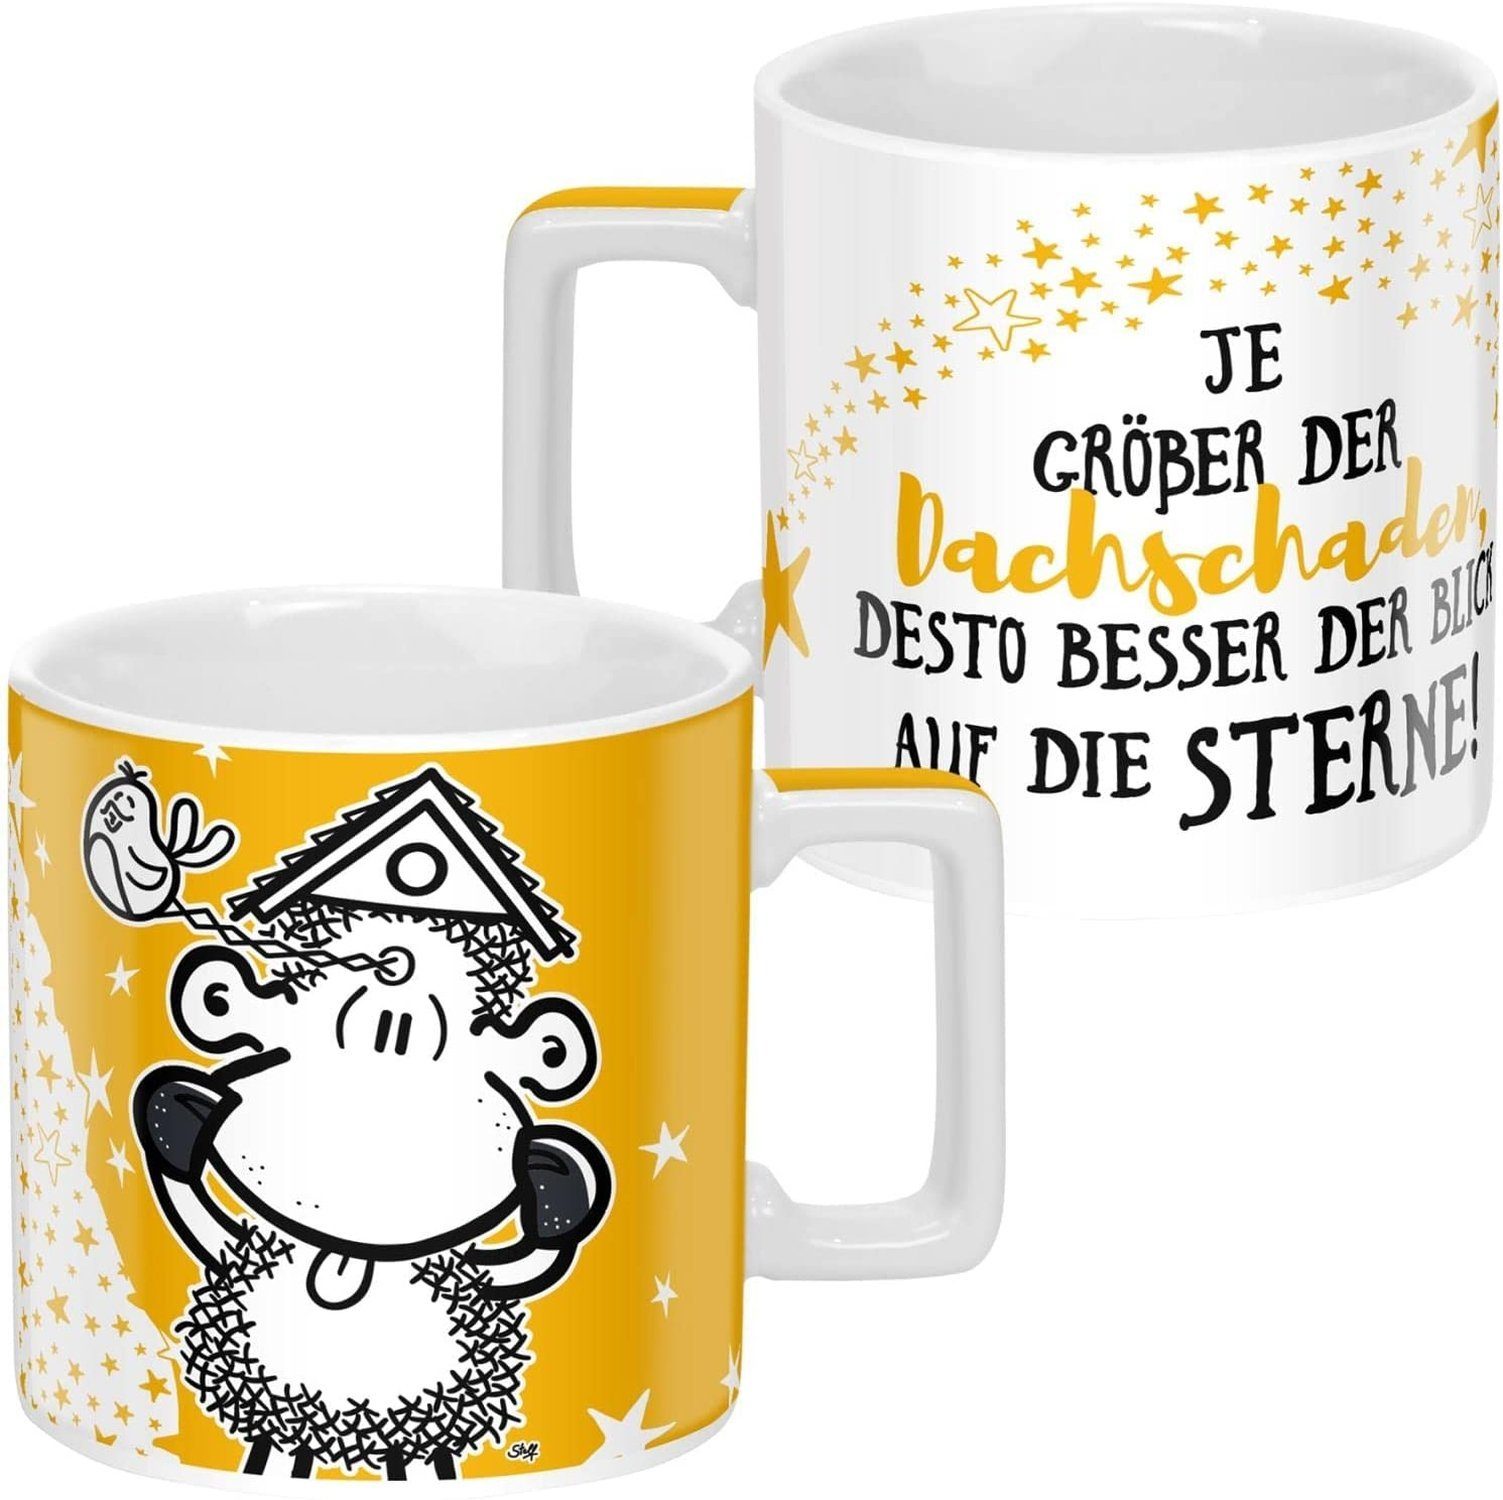 Sheepworld Tasse Kaffeetasse Kaffeebecher Teetasse Wortheld-Tasse Sheepworld 45cl, Material: Porzellan Sterne 47768